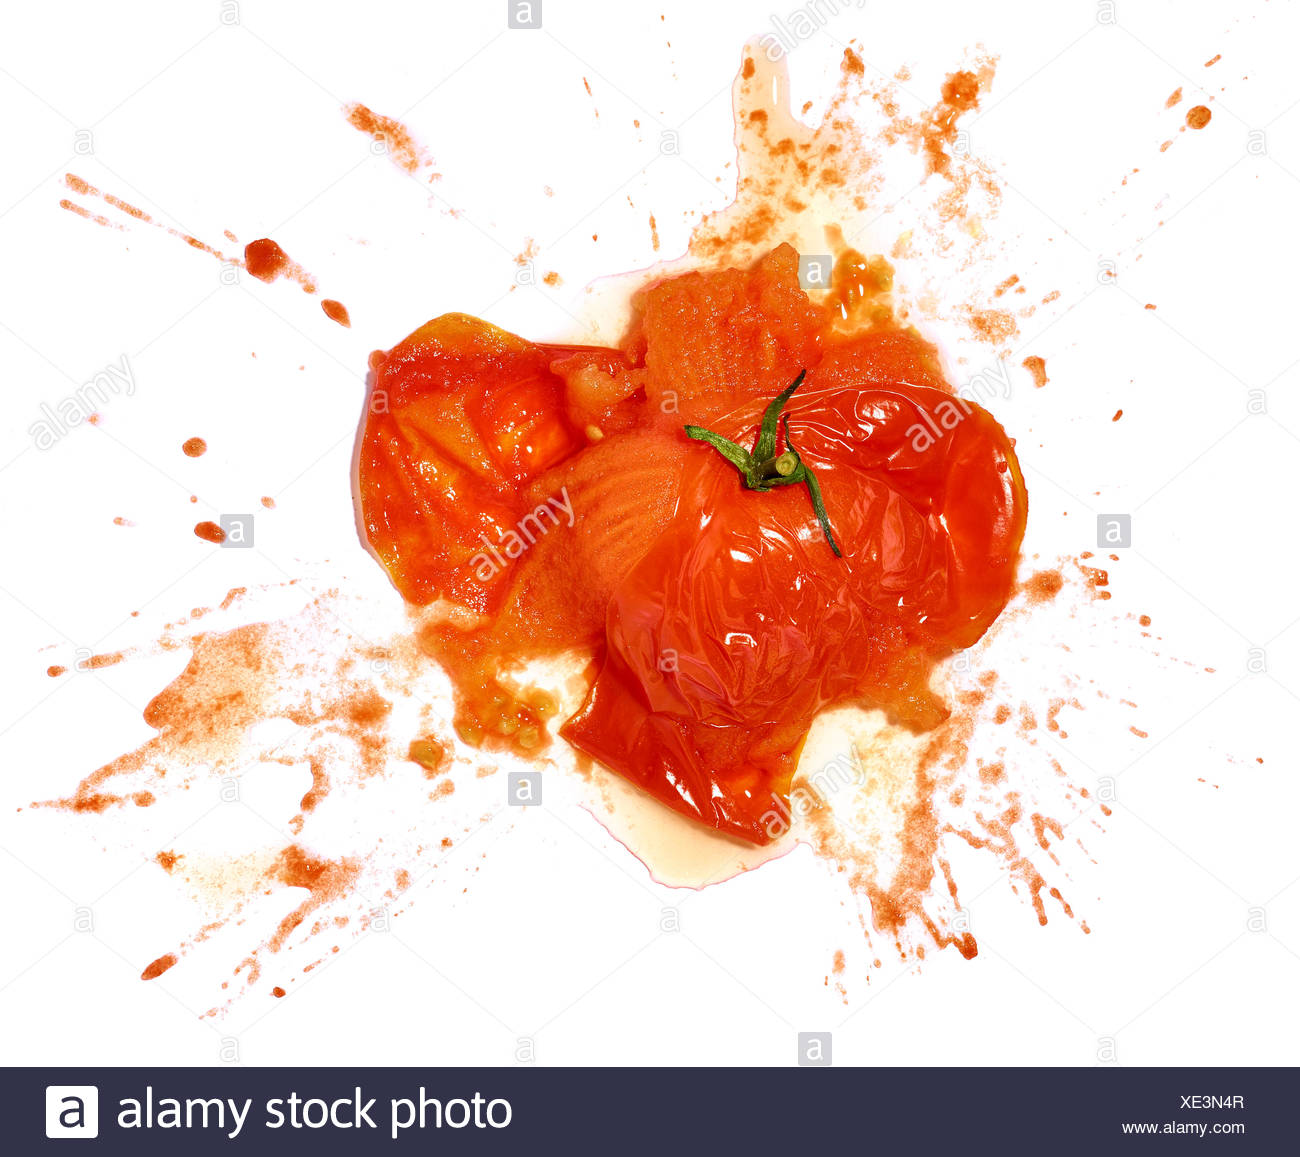 smashed-tomato-on-white-background-XE3N4R